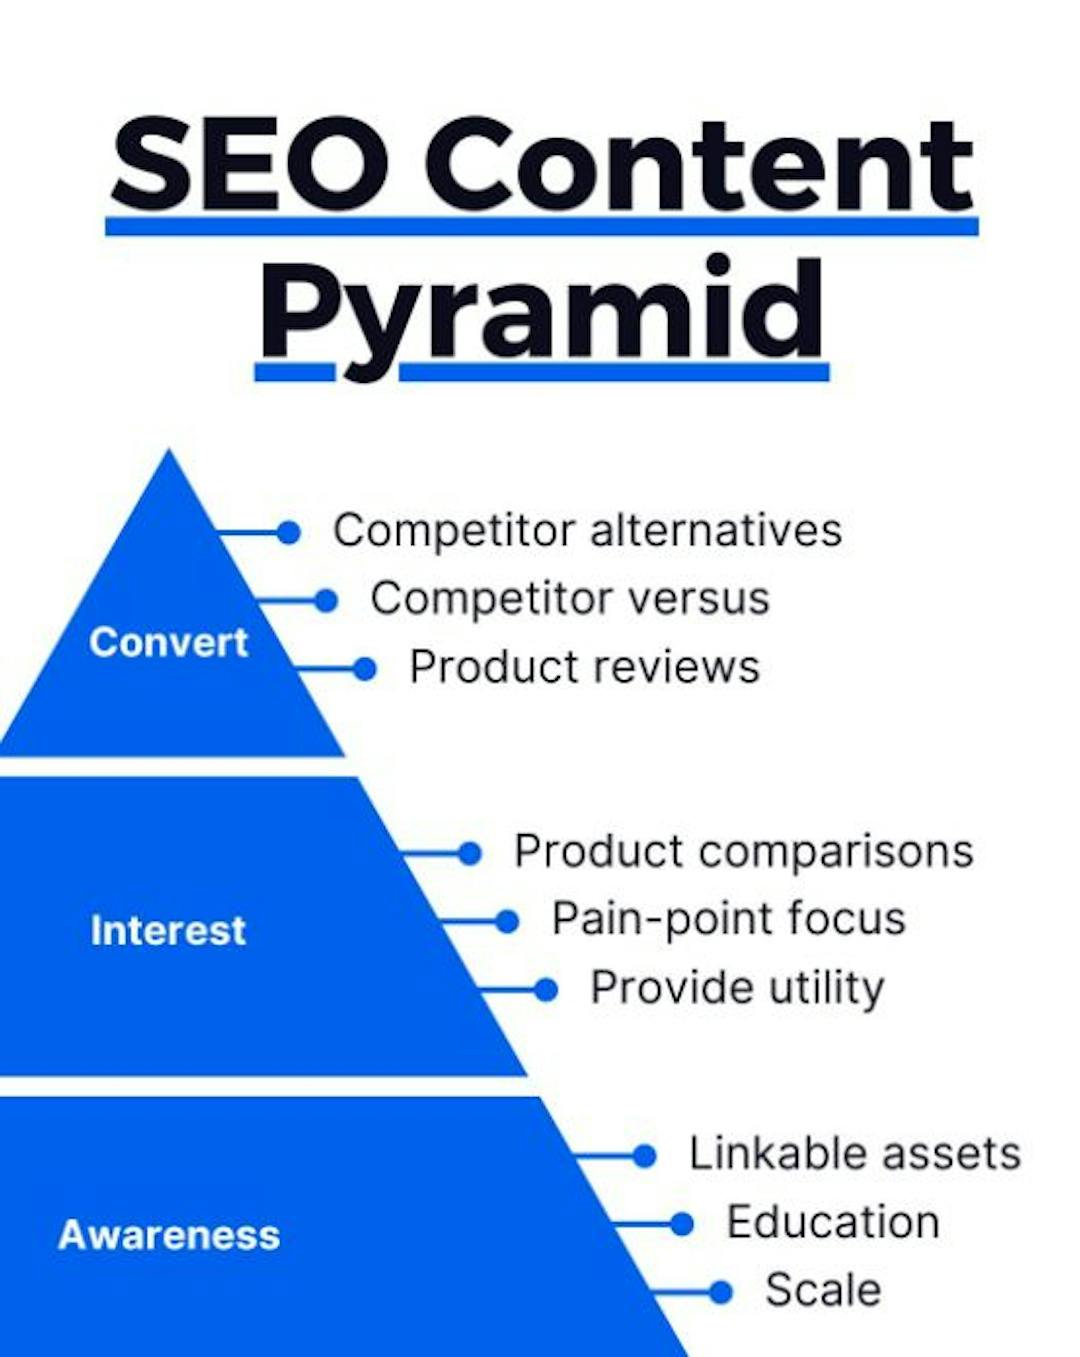 SEO Content Pyramid